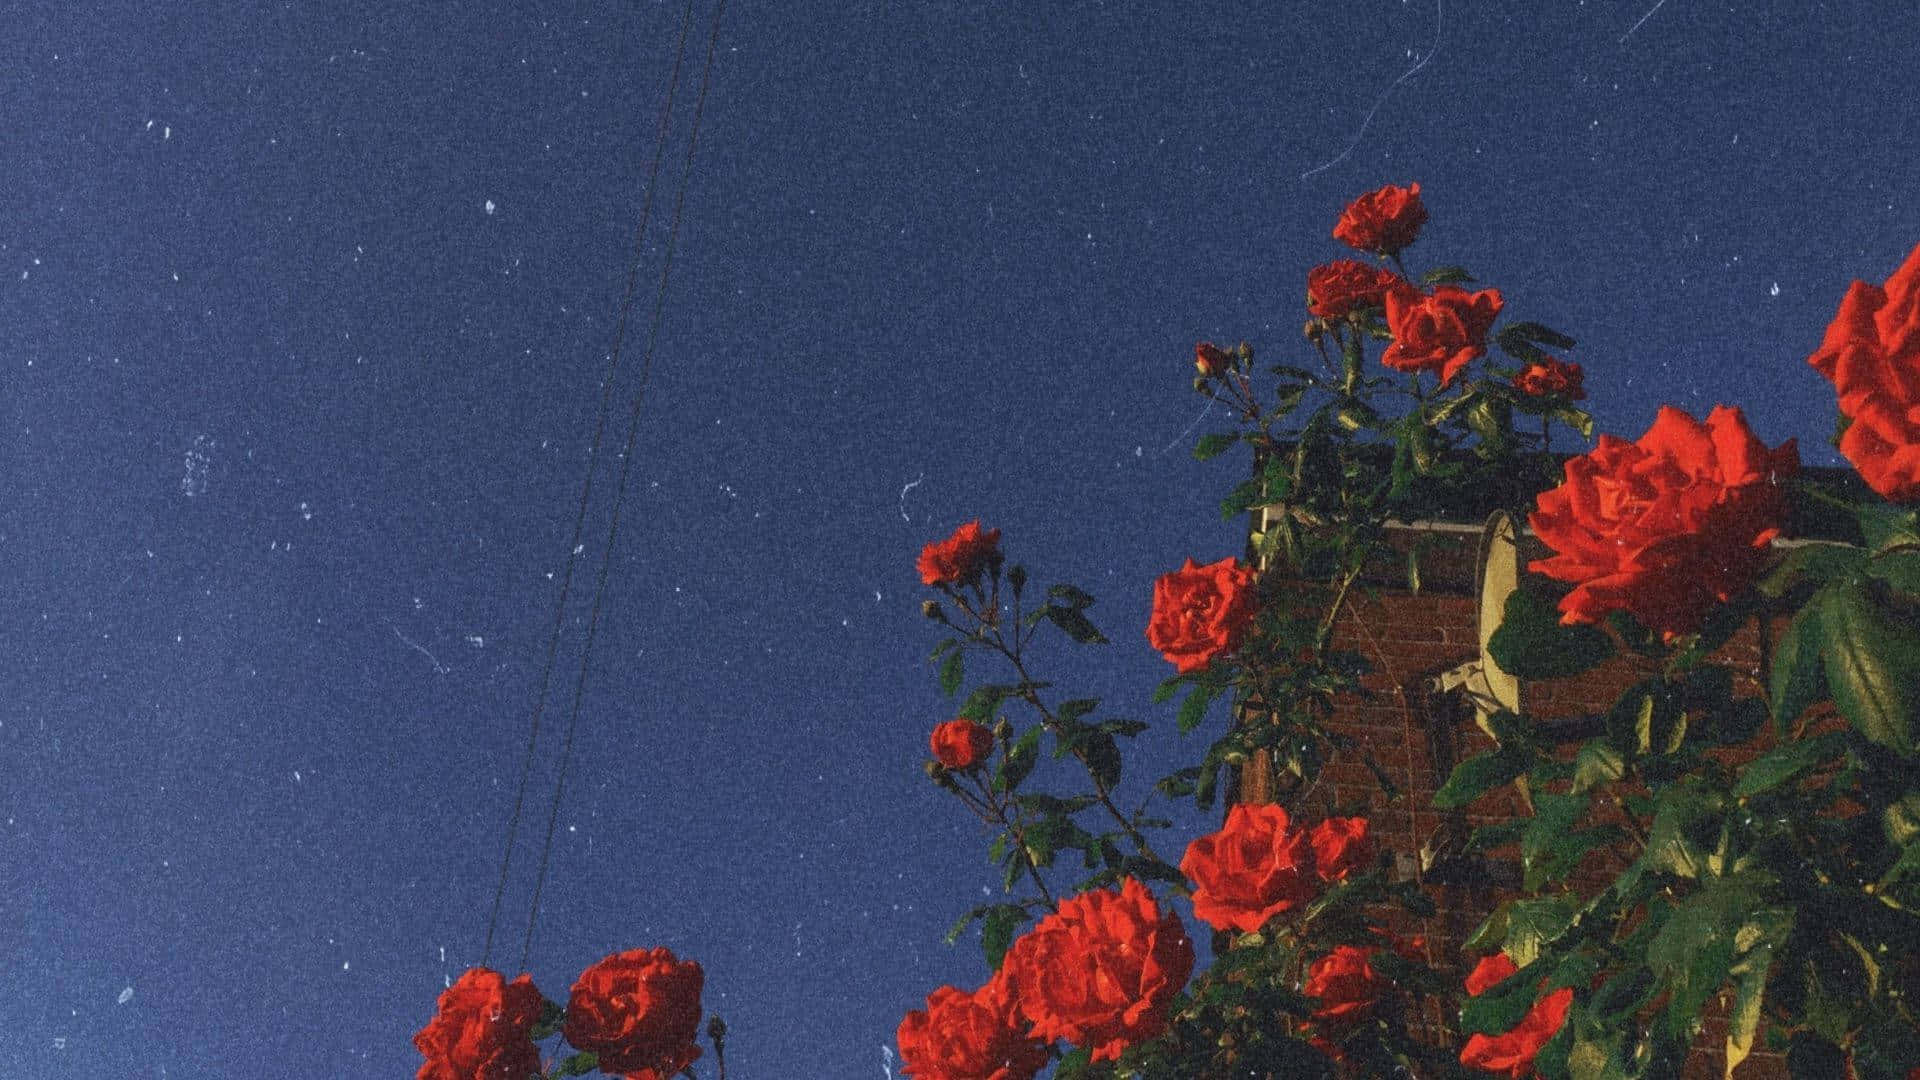 Aesthetic Rose Background: Serene and Elegant